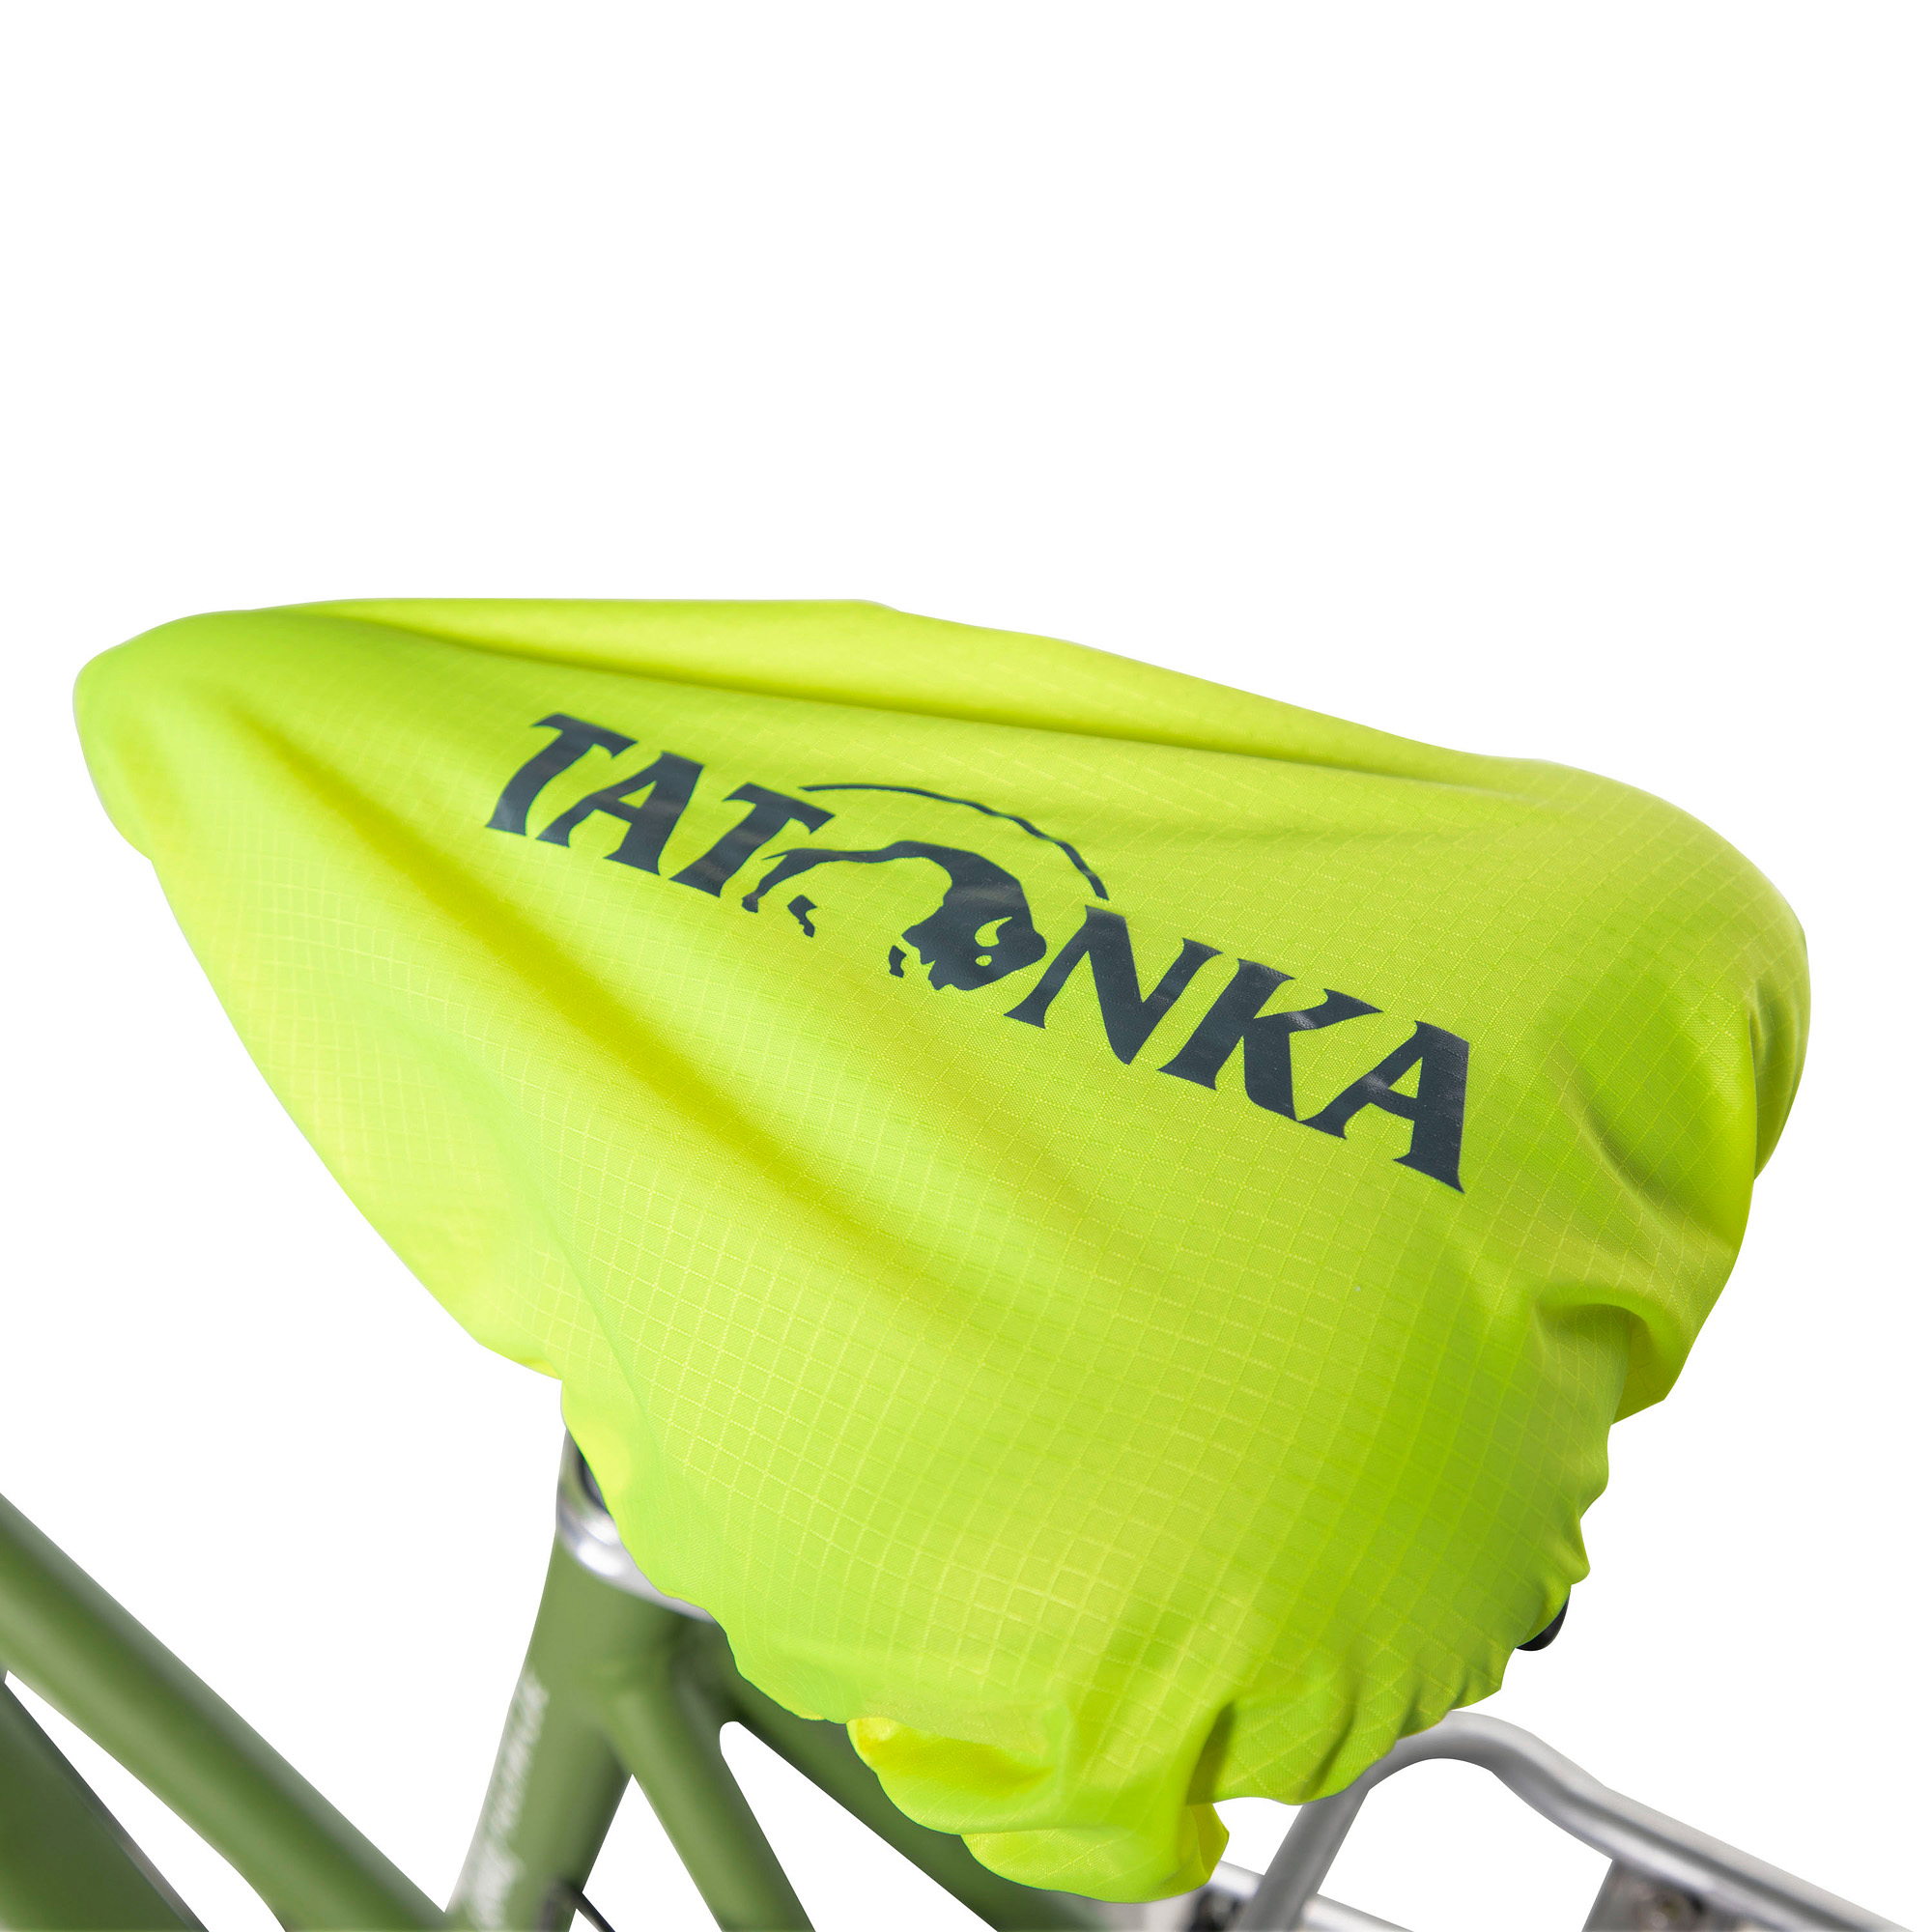 Tatonka Saddle Cover safety yellow gelb Fahrrad-Zubehör 4013236355000